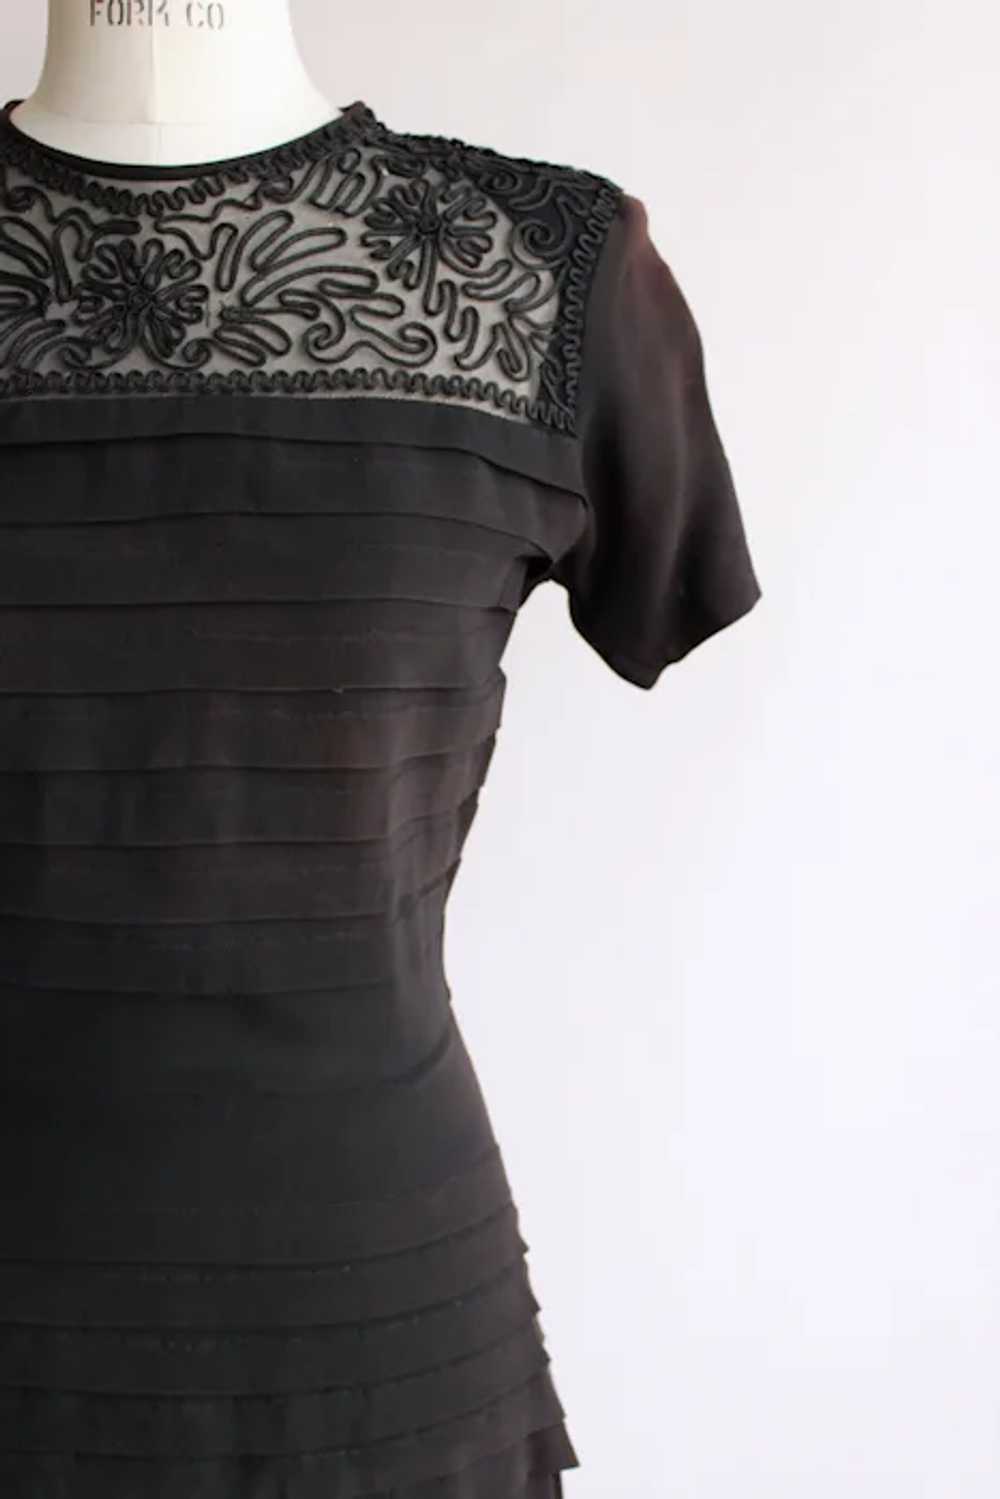 Vintage 1940s Dress / Black Rayon Dress With Sout… - image 11